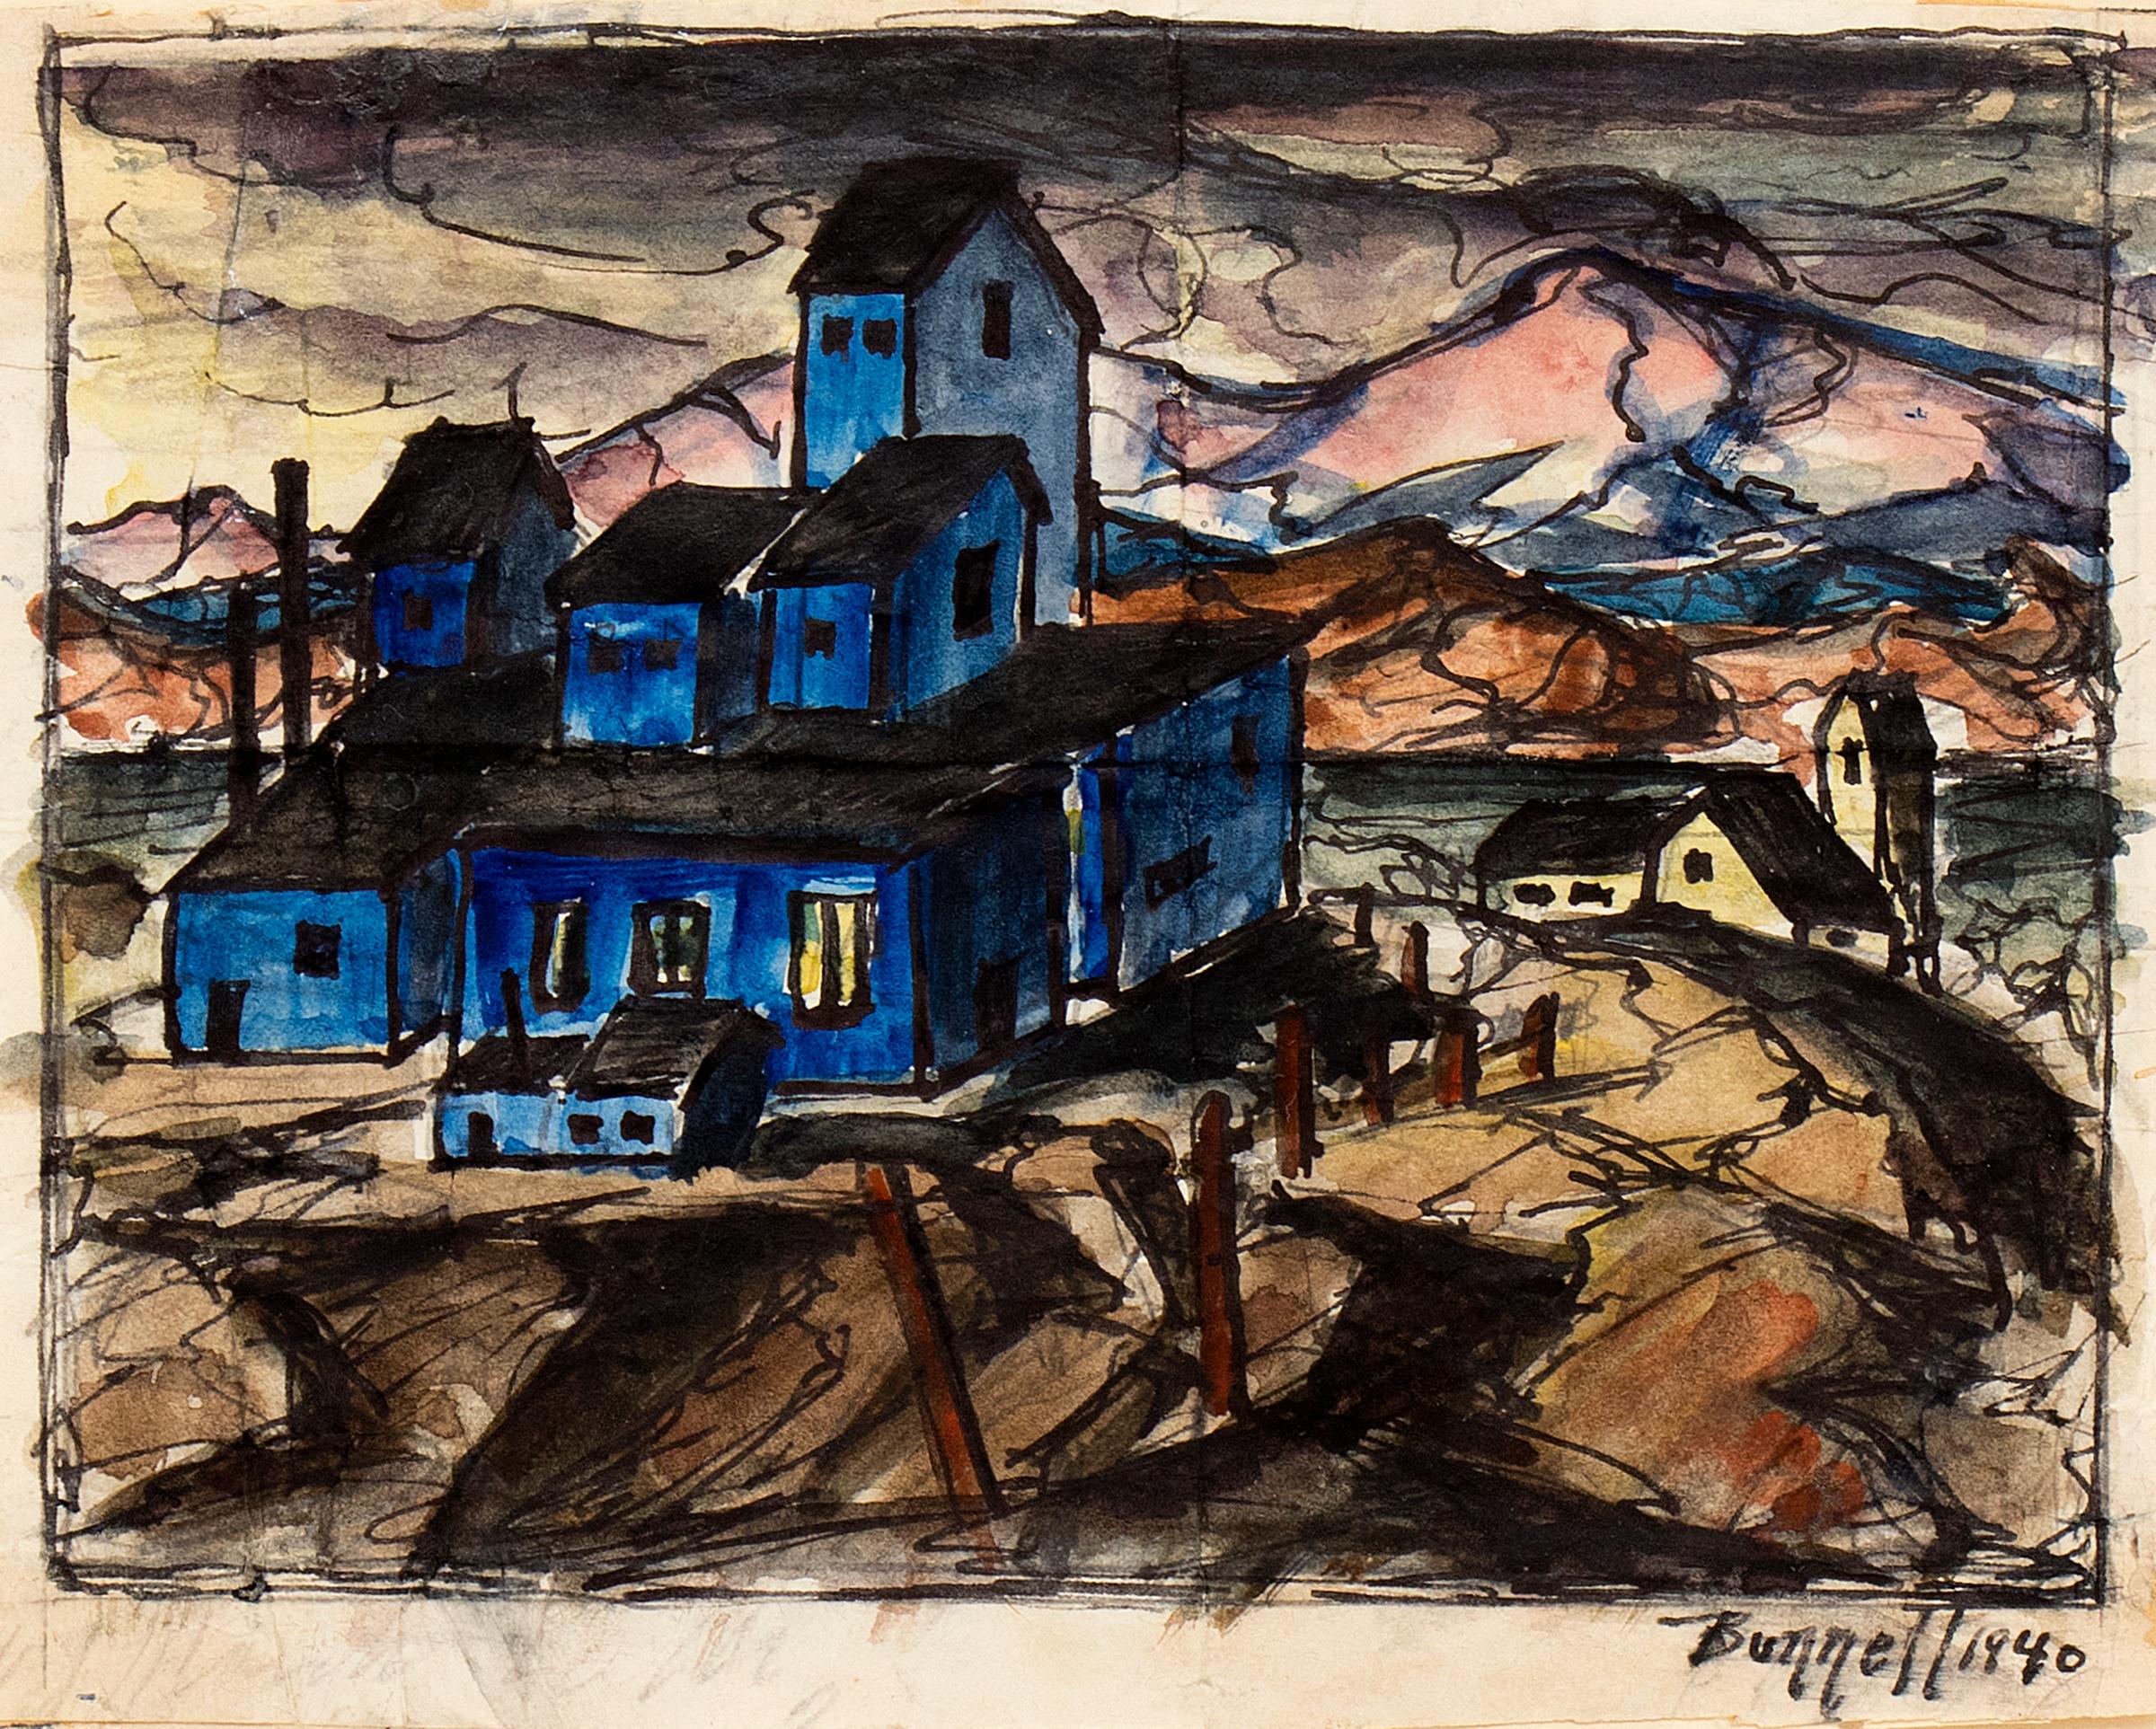 Cripple Creek Victor Mine, Colorado-Berglandschaft, Aquarellmalerei, 1940 – Painting von Charles Ragland Bunnell